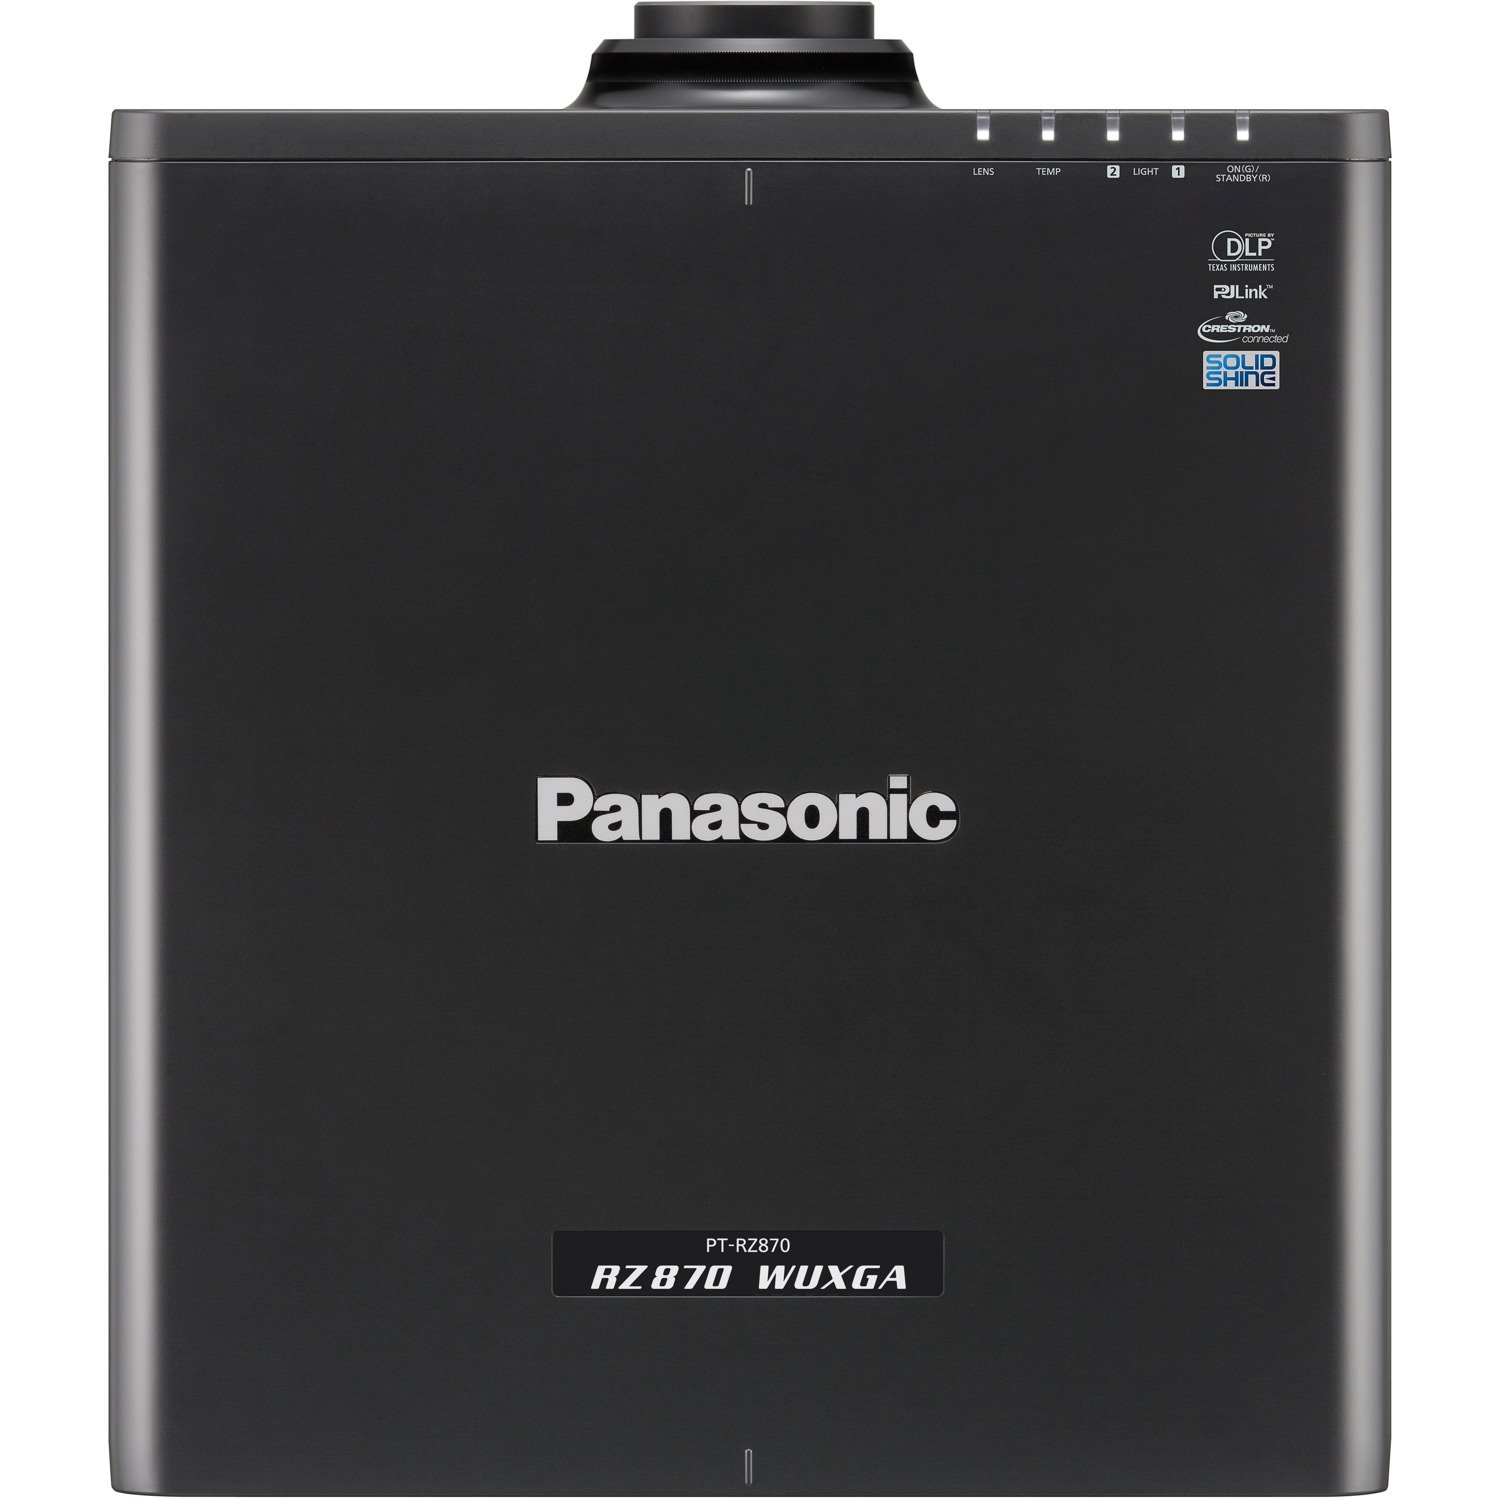 Panasonic SOLID SHINE PT-RZ870L DLP Projector - 16:10